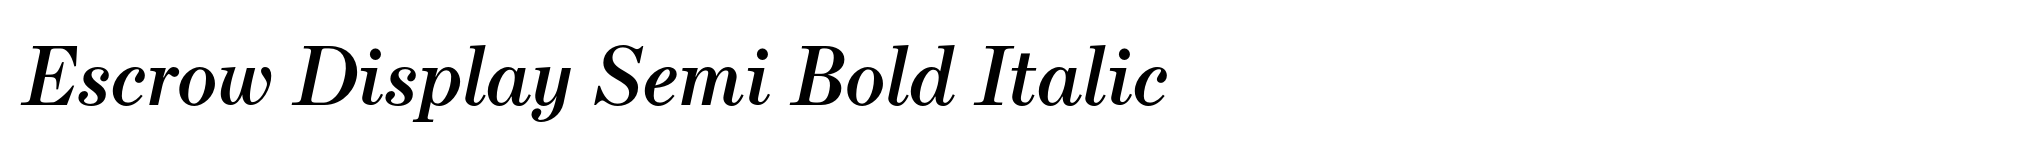 Escrow Display Semi Bold Italic image